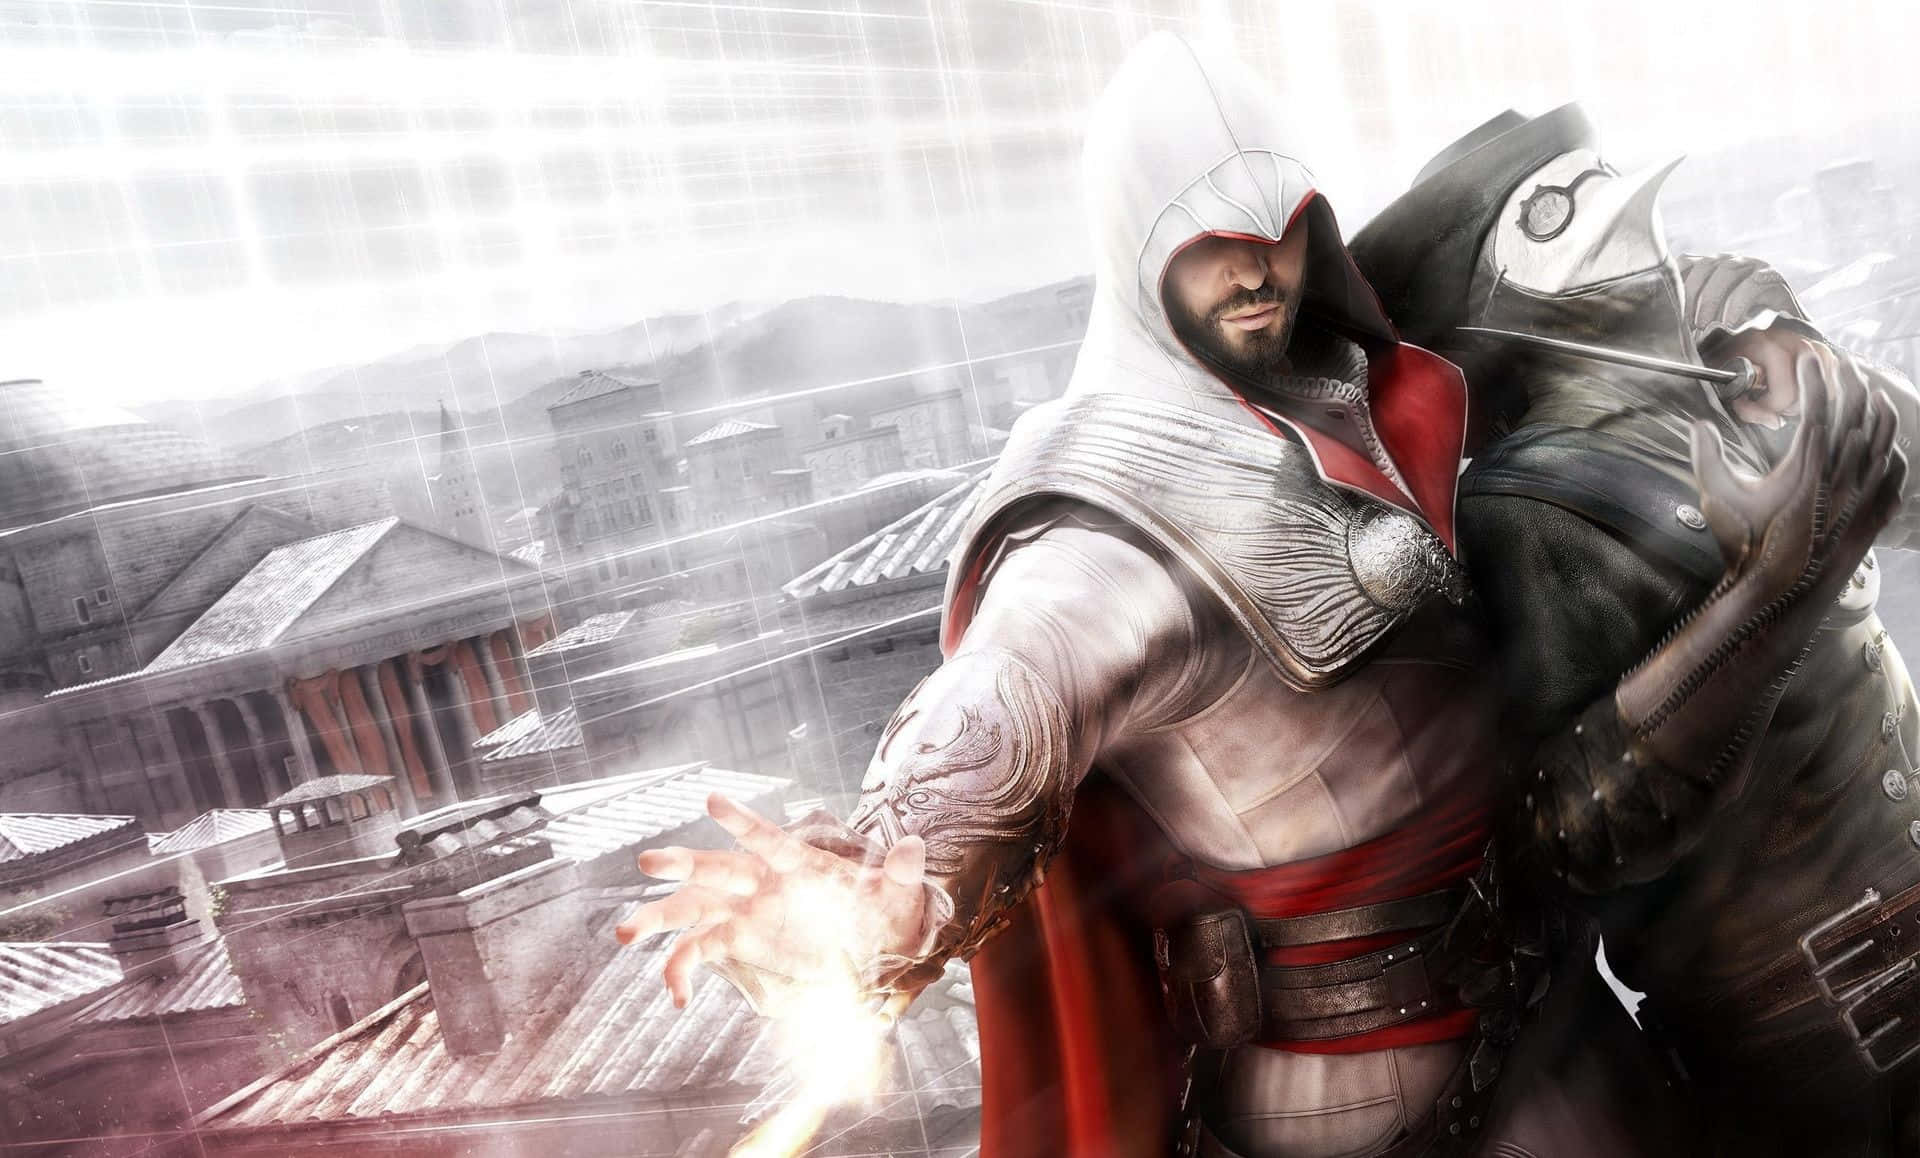 Ezio Auditore da Firenze, Master Assassin, against Rome's iconic landmarks in Assassin's Creed Brotherhood Wallpaper